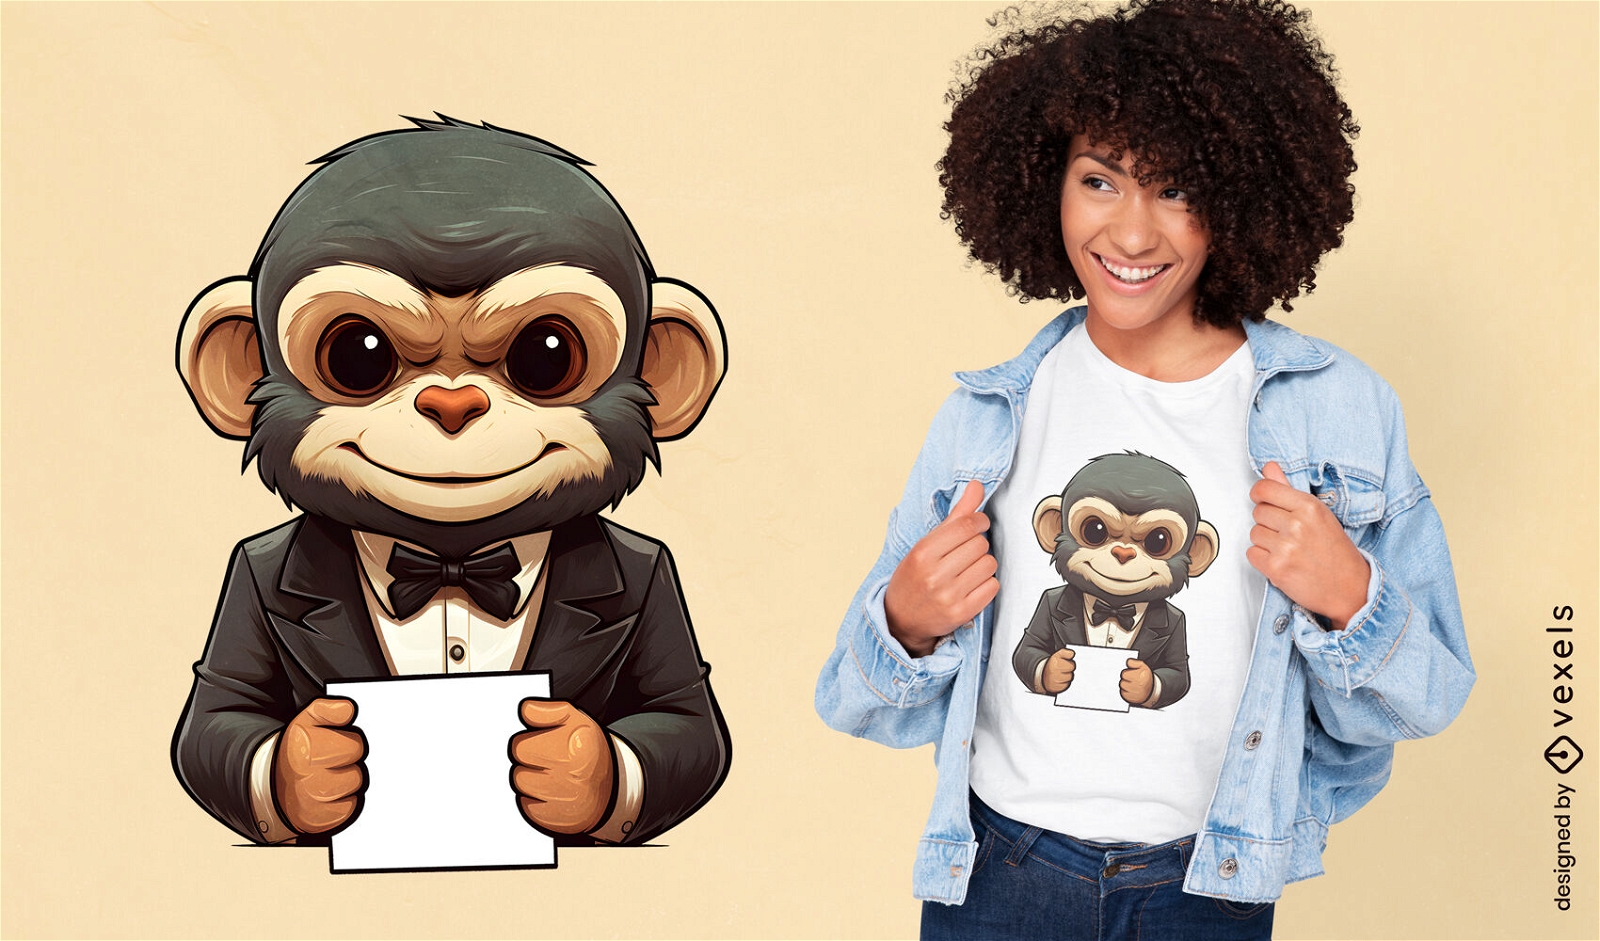 Monkey holding a sign t-shirt design